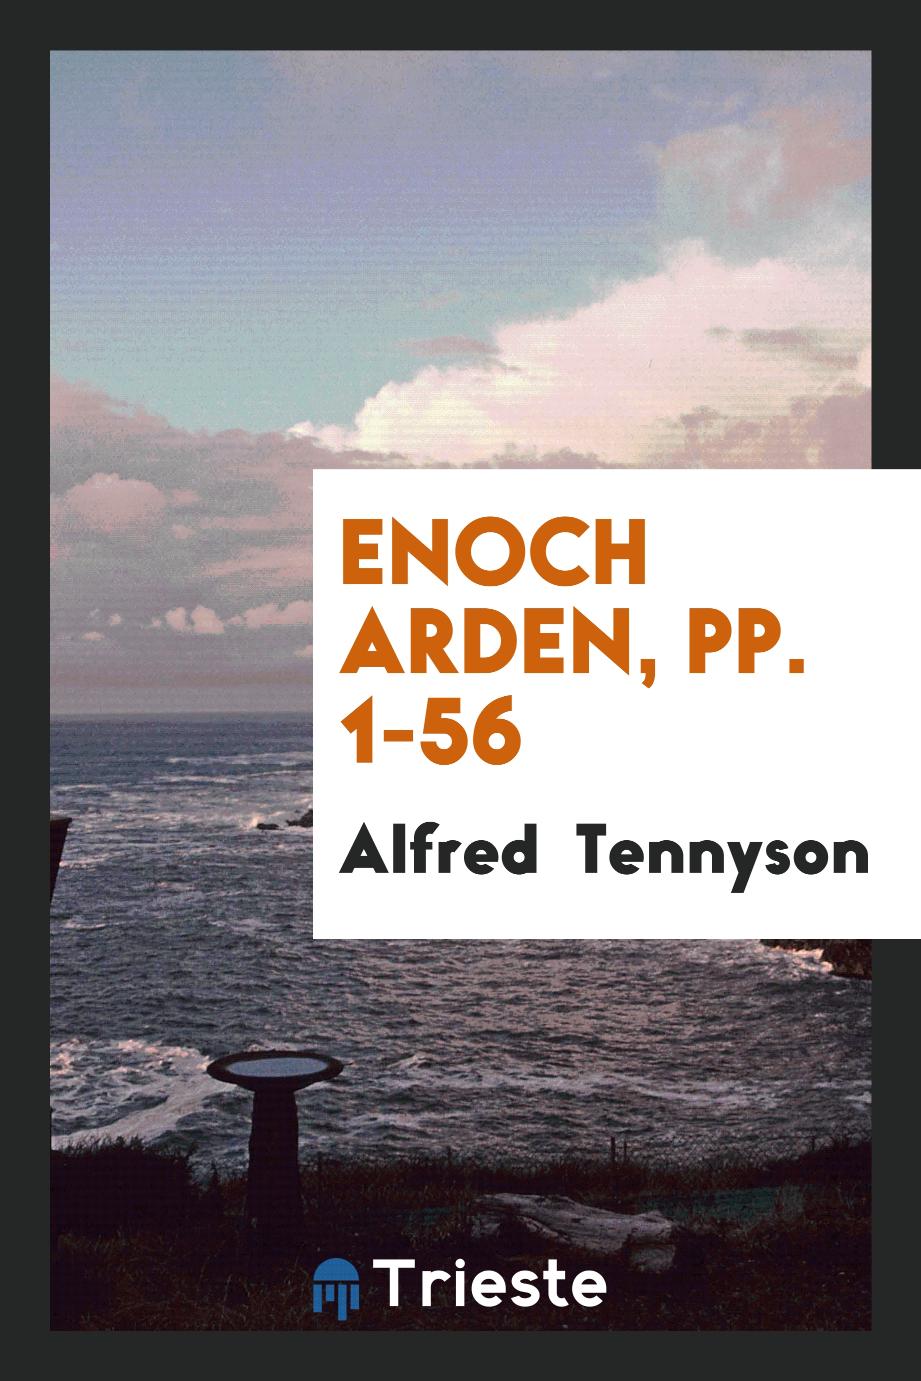 Enoch Arden, pp. 1-56